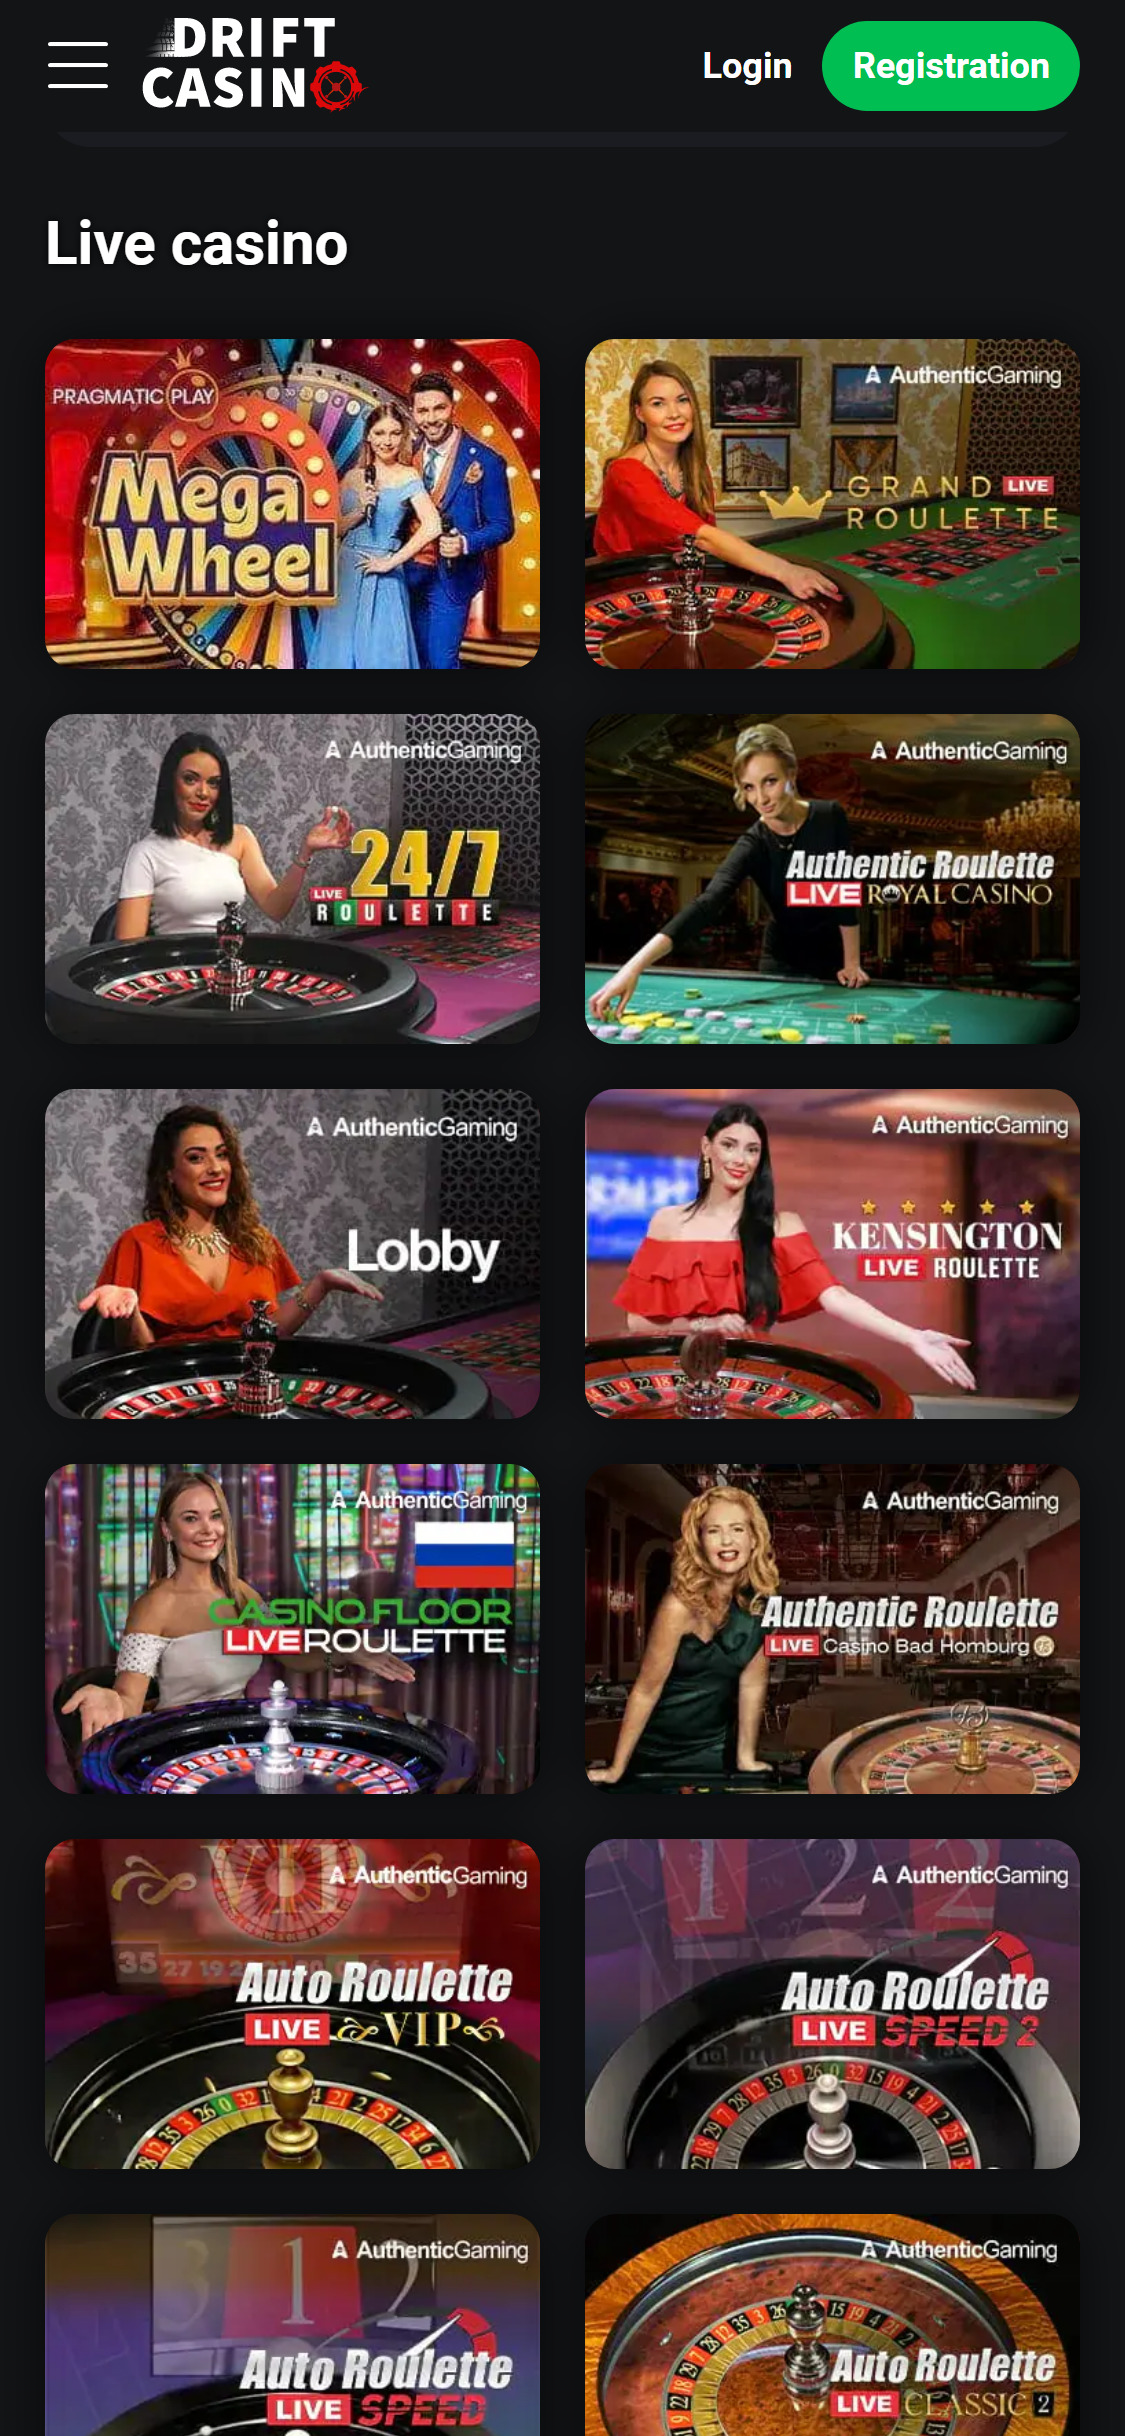 Casino Drift Mobile Live Dealer Games Review